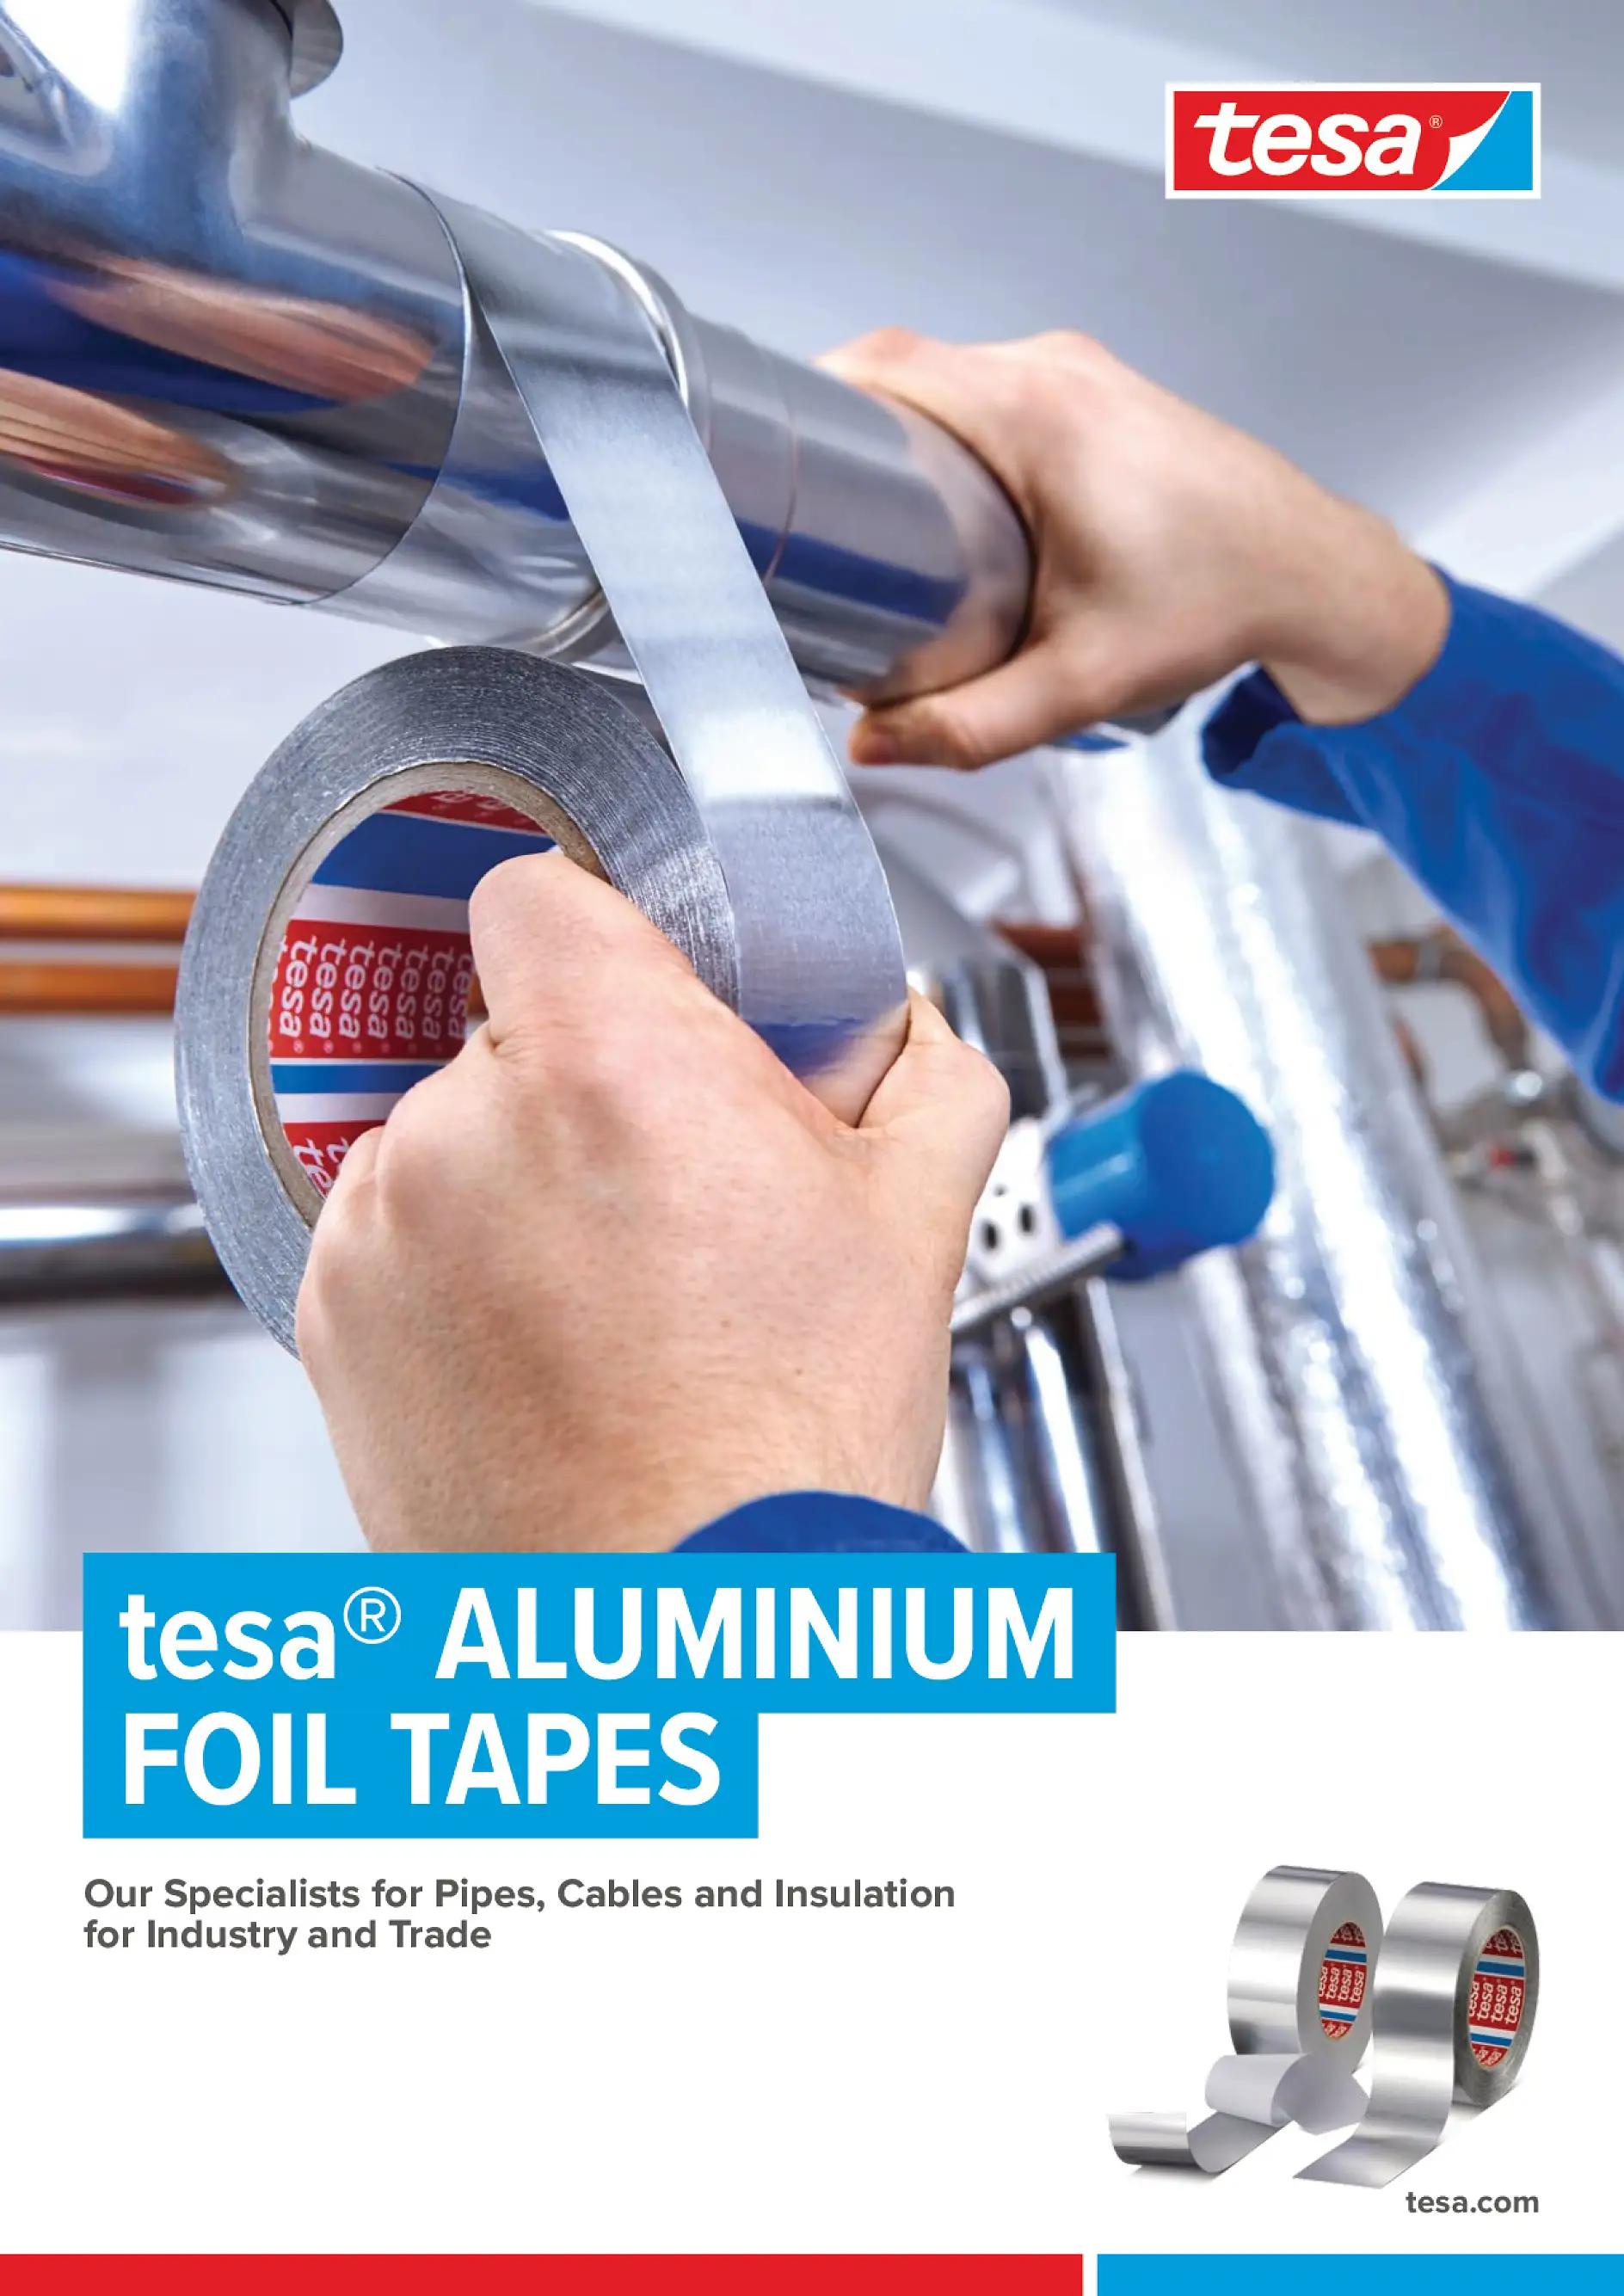 tesa-Aluminum-Foil-Tape-Overview